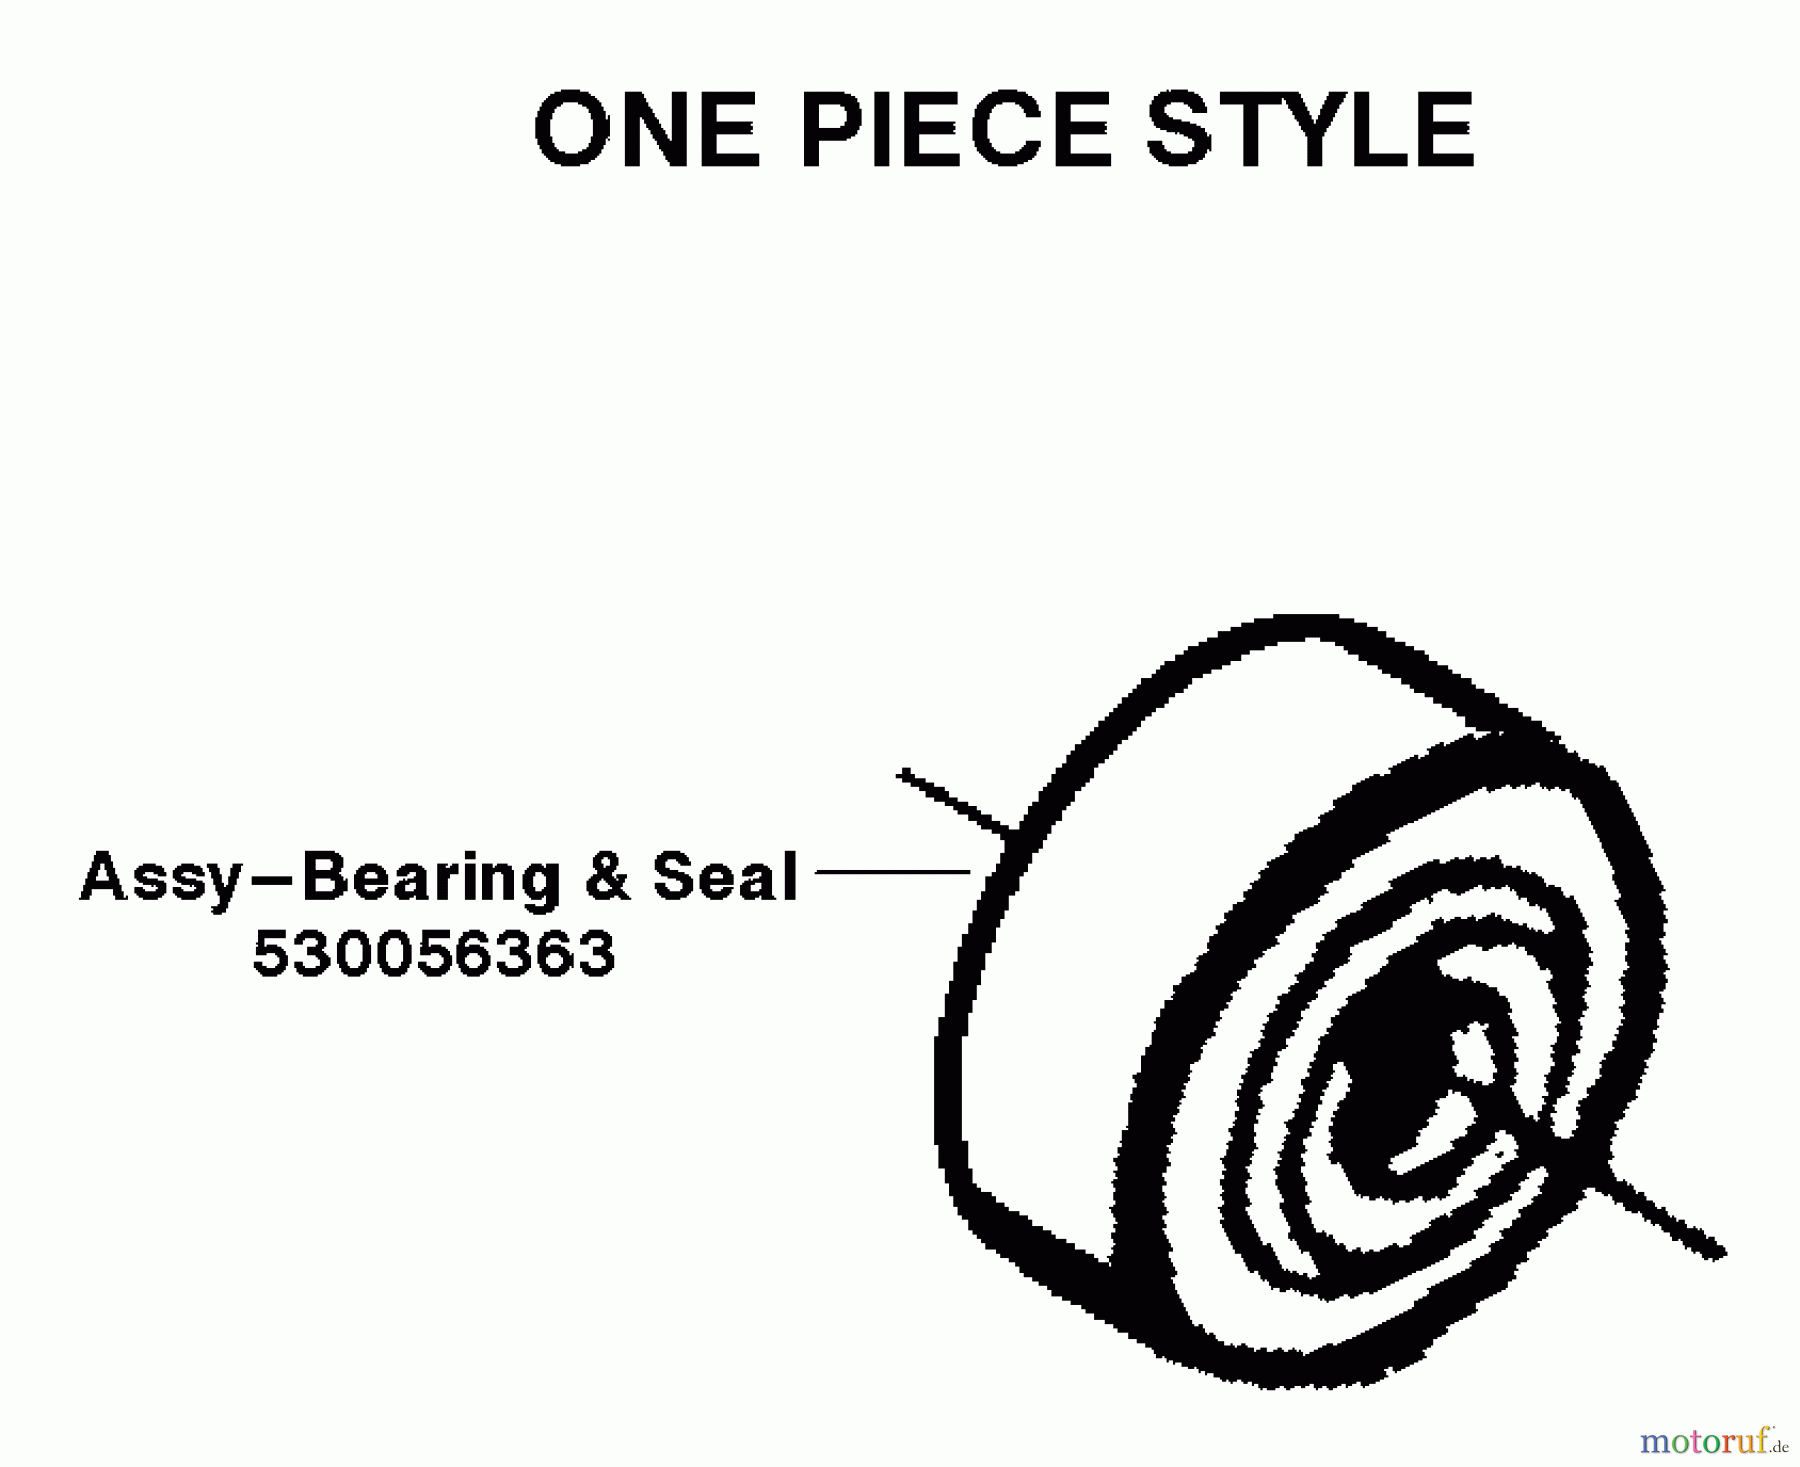  Poulan / Weed Eater Motorsägen 2775 (Type 1) - Poulan Chainsaw Bearing & Seal - One Piece Style